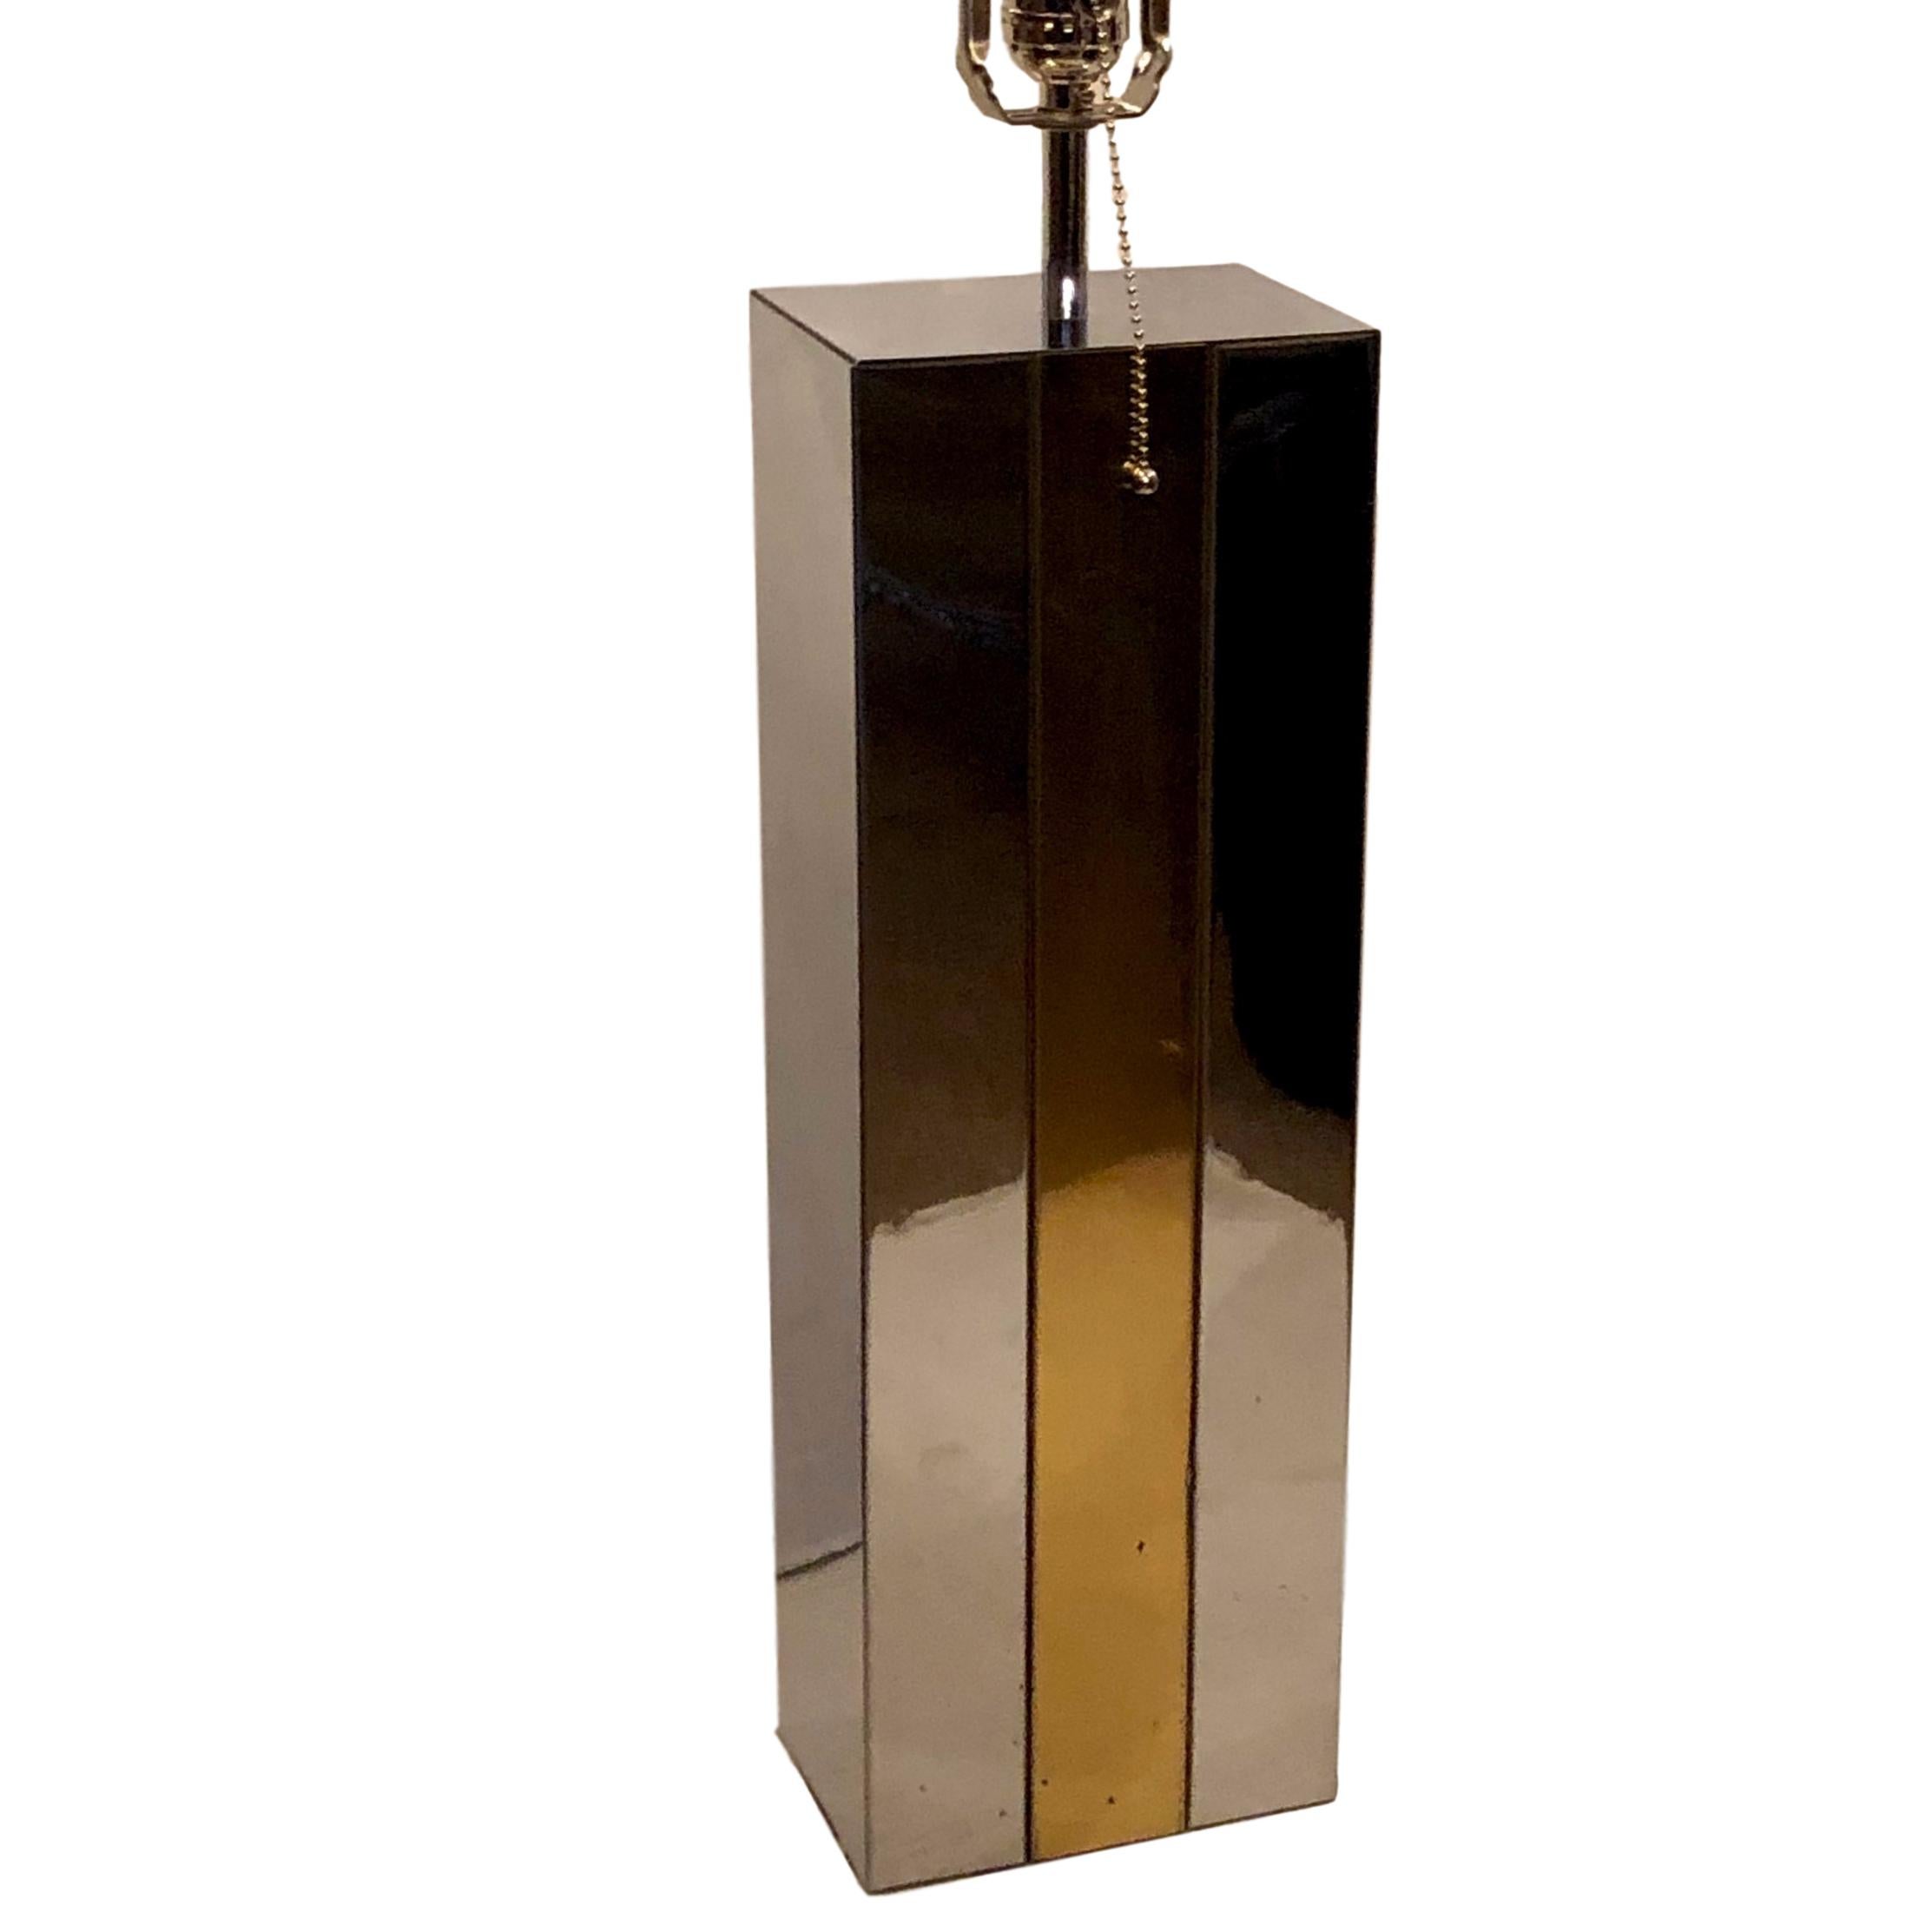 A single Italian circa 1960's two-tone metal rectangular lamp.

Measurements:
Height: 18